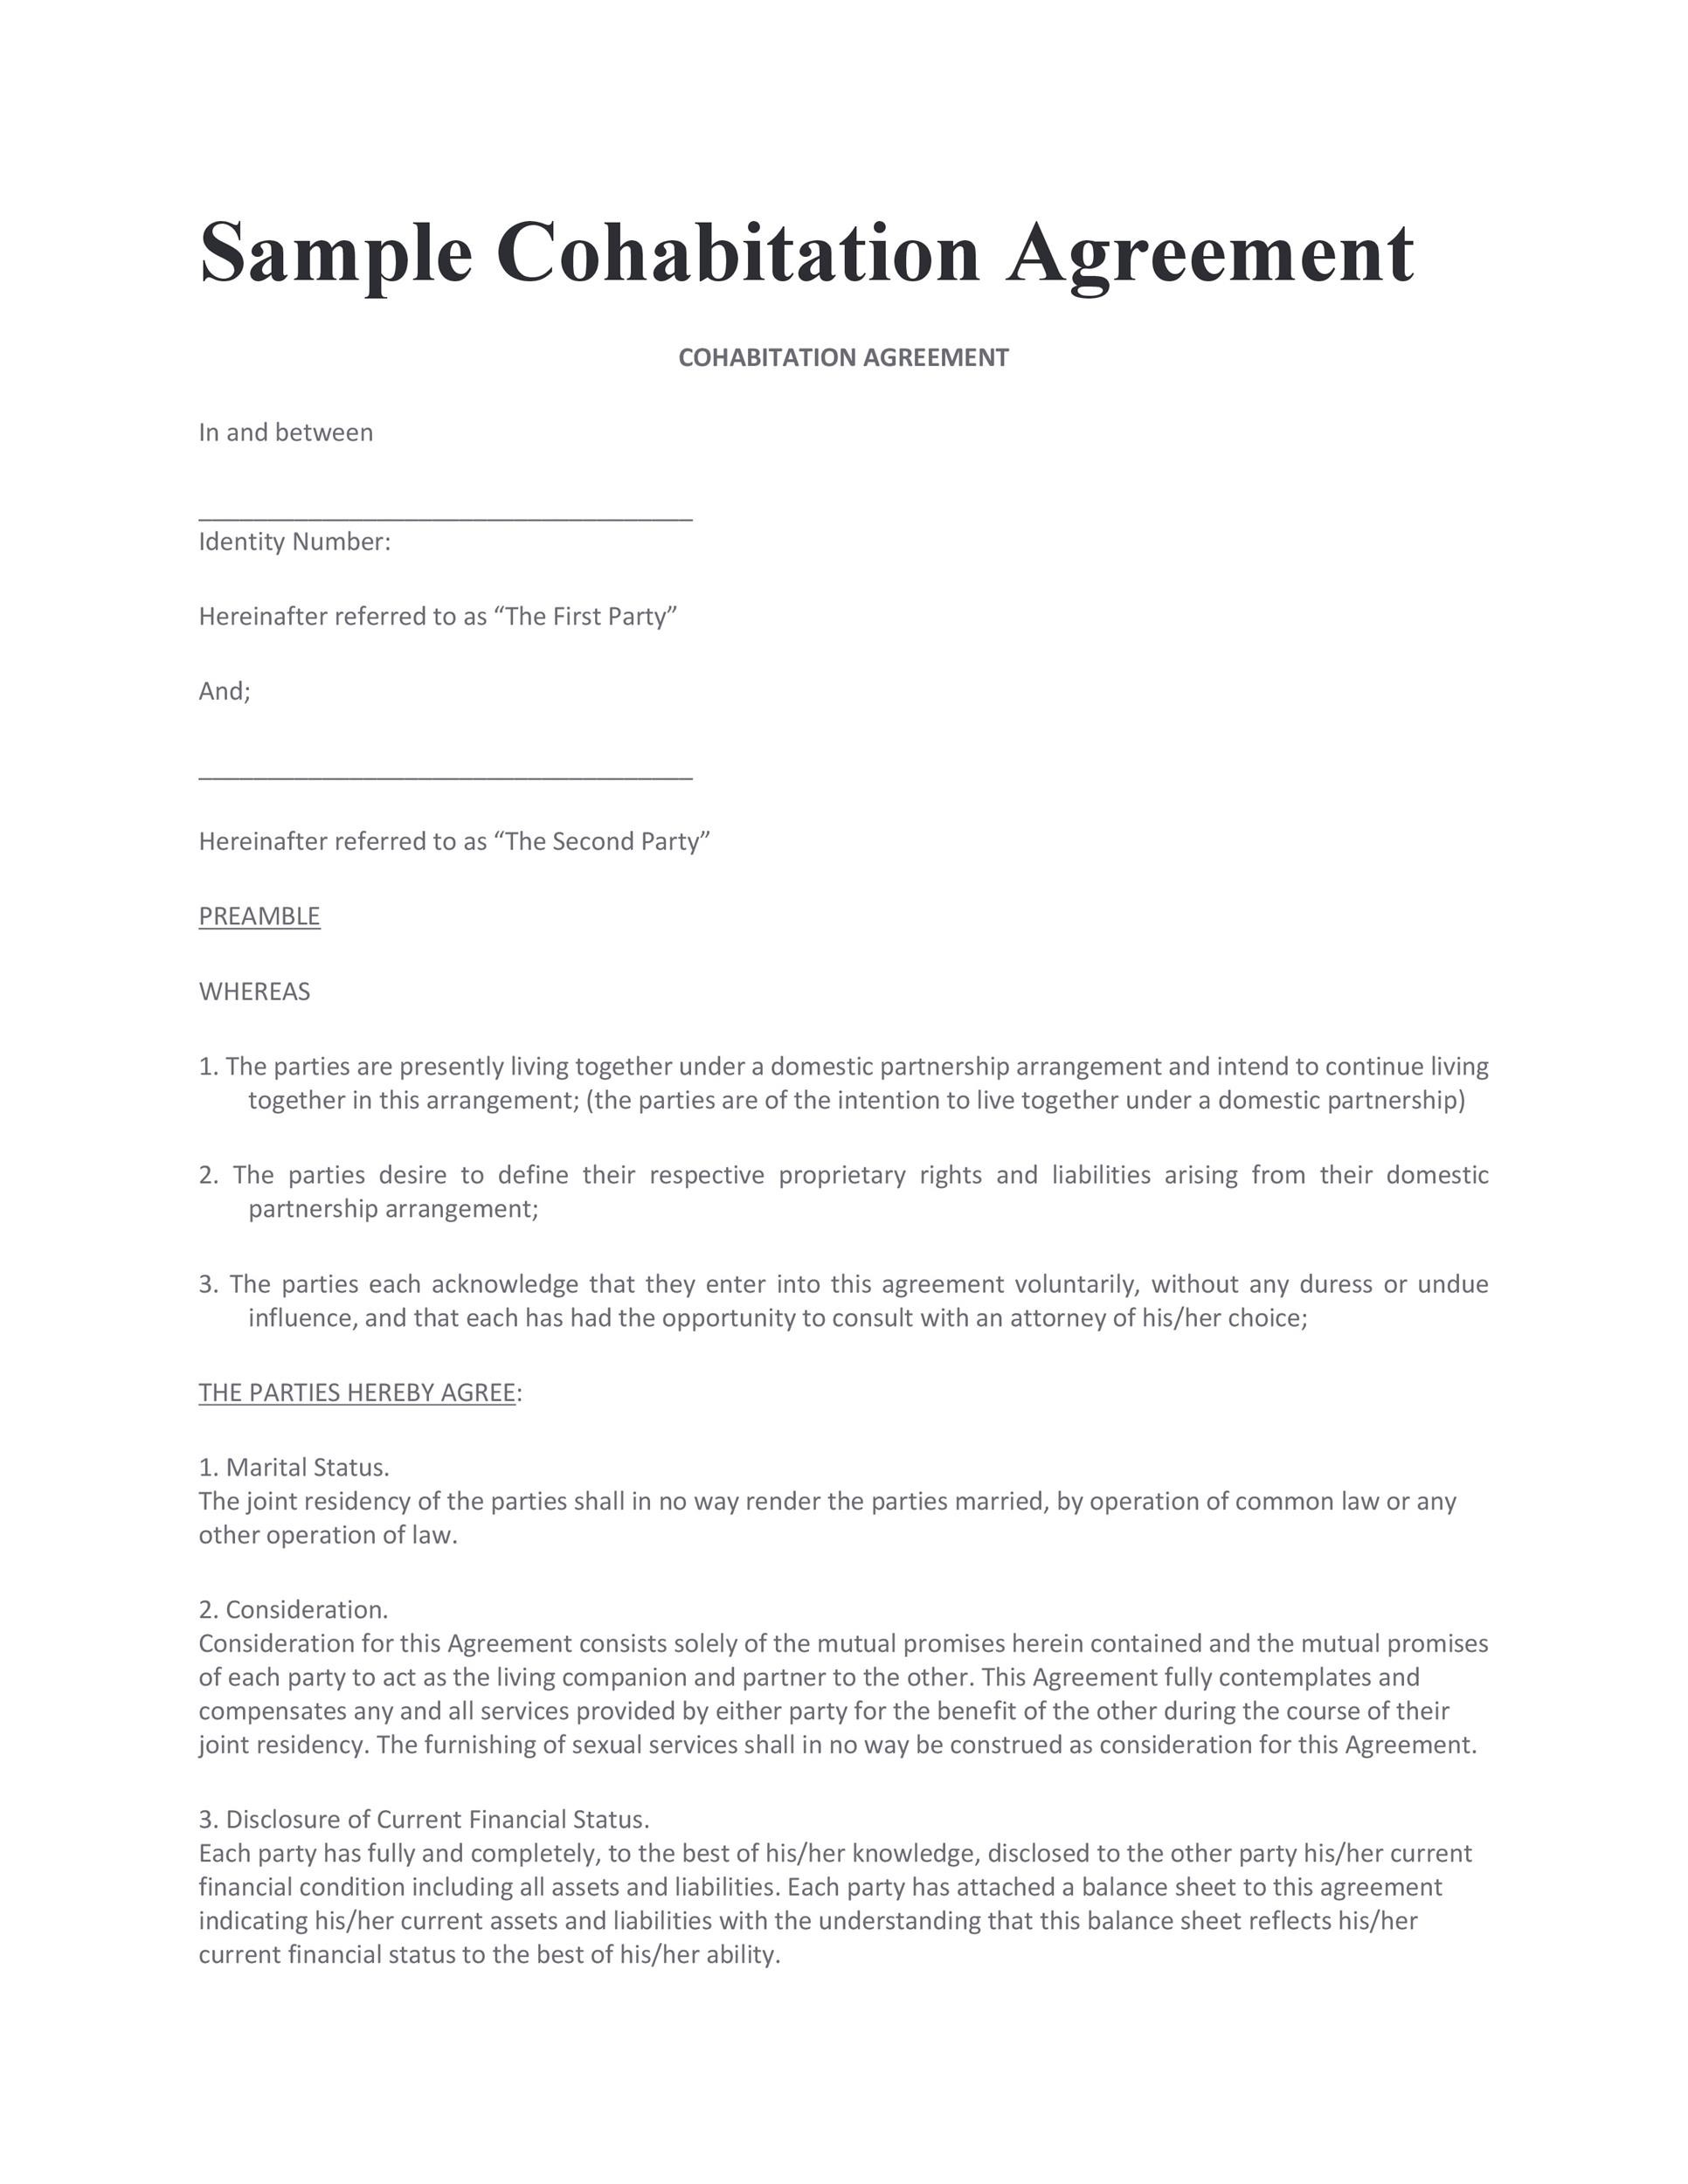 Free cohabitation agreement template 20